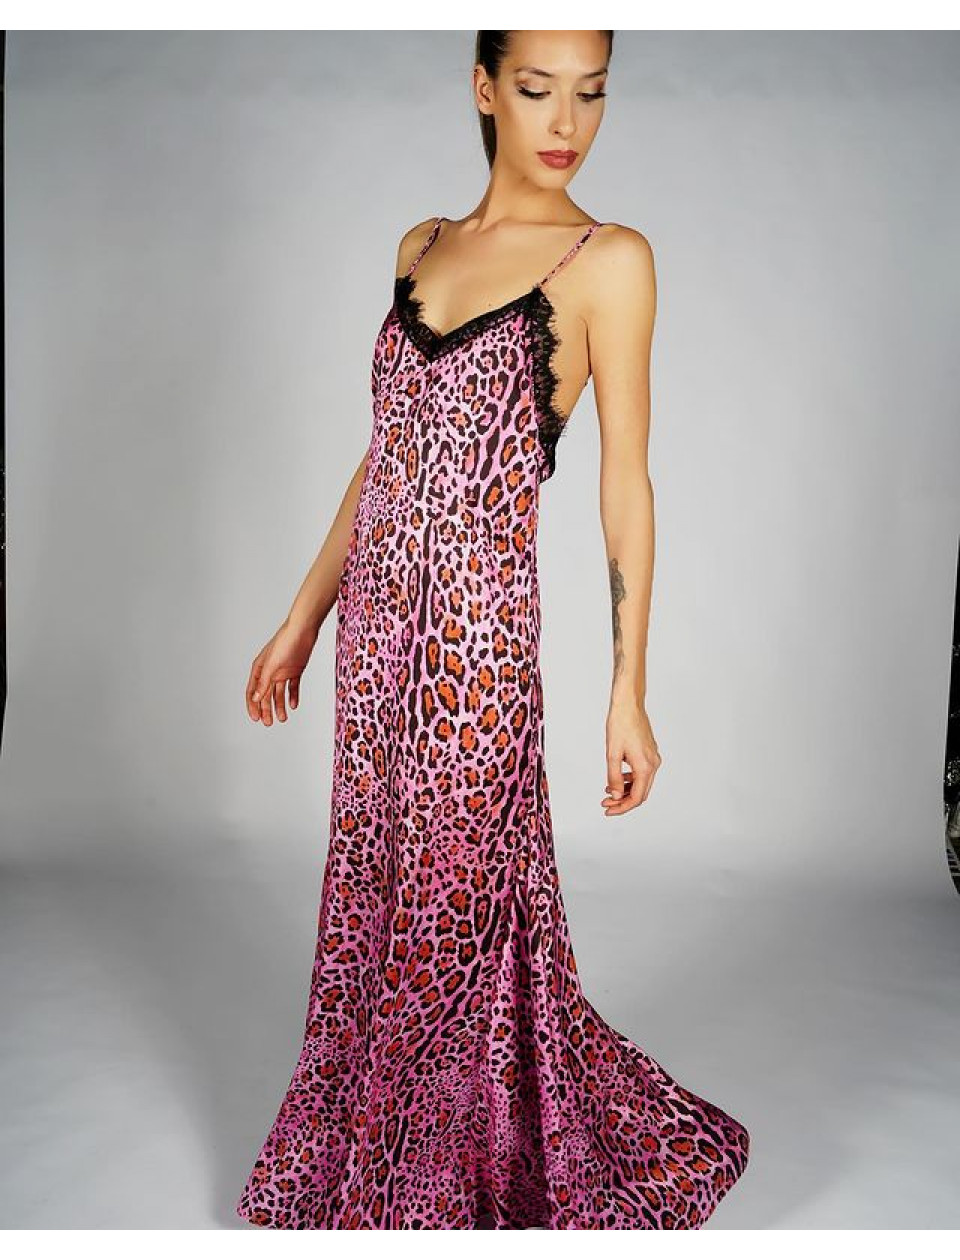 Leopard woman pink dress